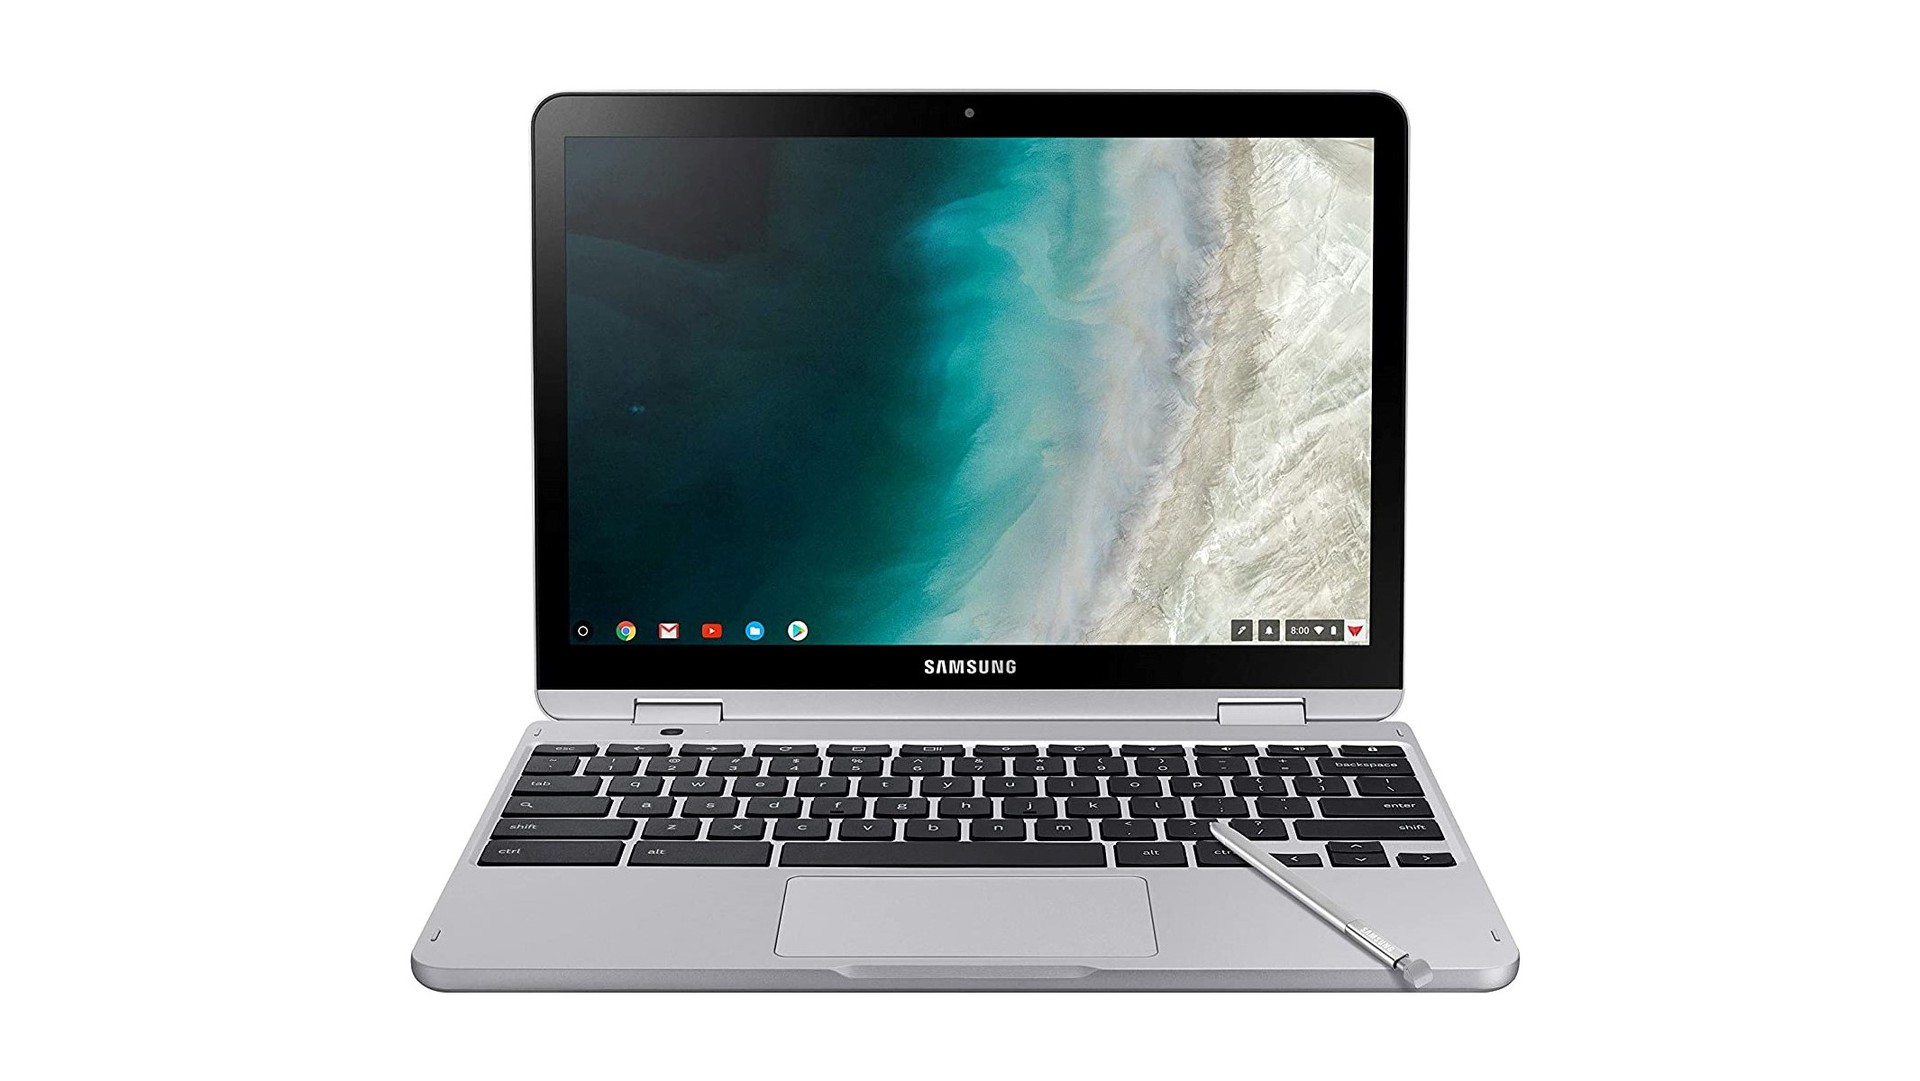 Samsung Chromebook Plus V2 tablet convertible - The best mini laptops